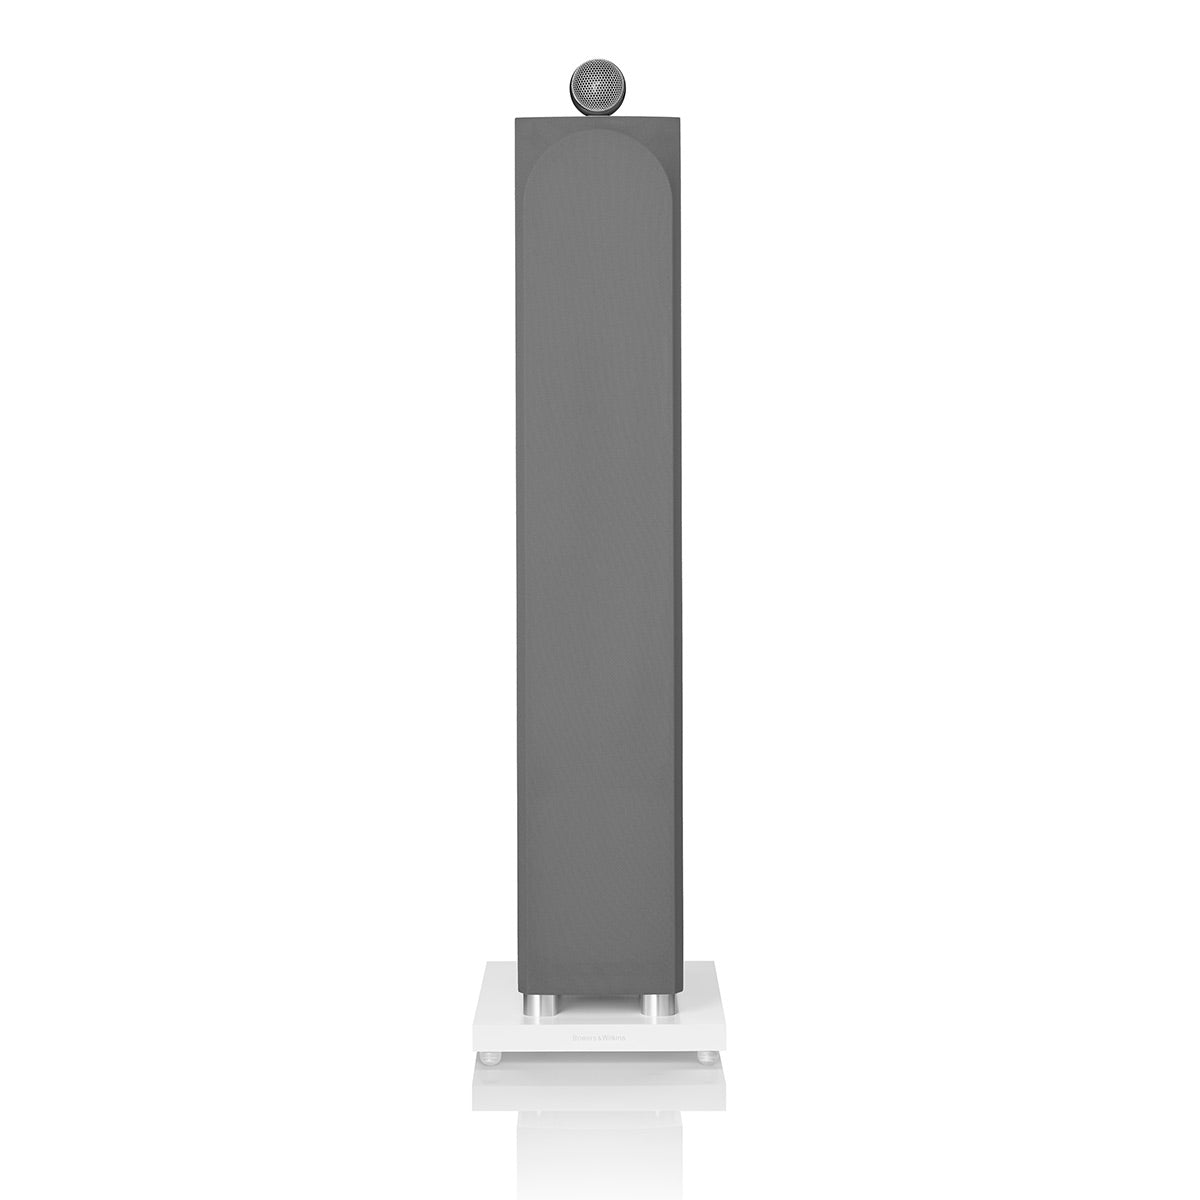 Bowers & Wilkins 702 S3 3-Way Floorstanding Speaker - Pair (Satin White)